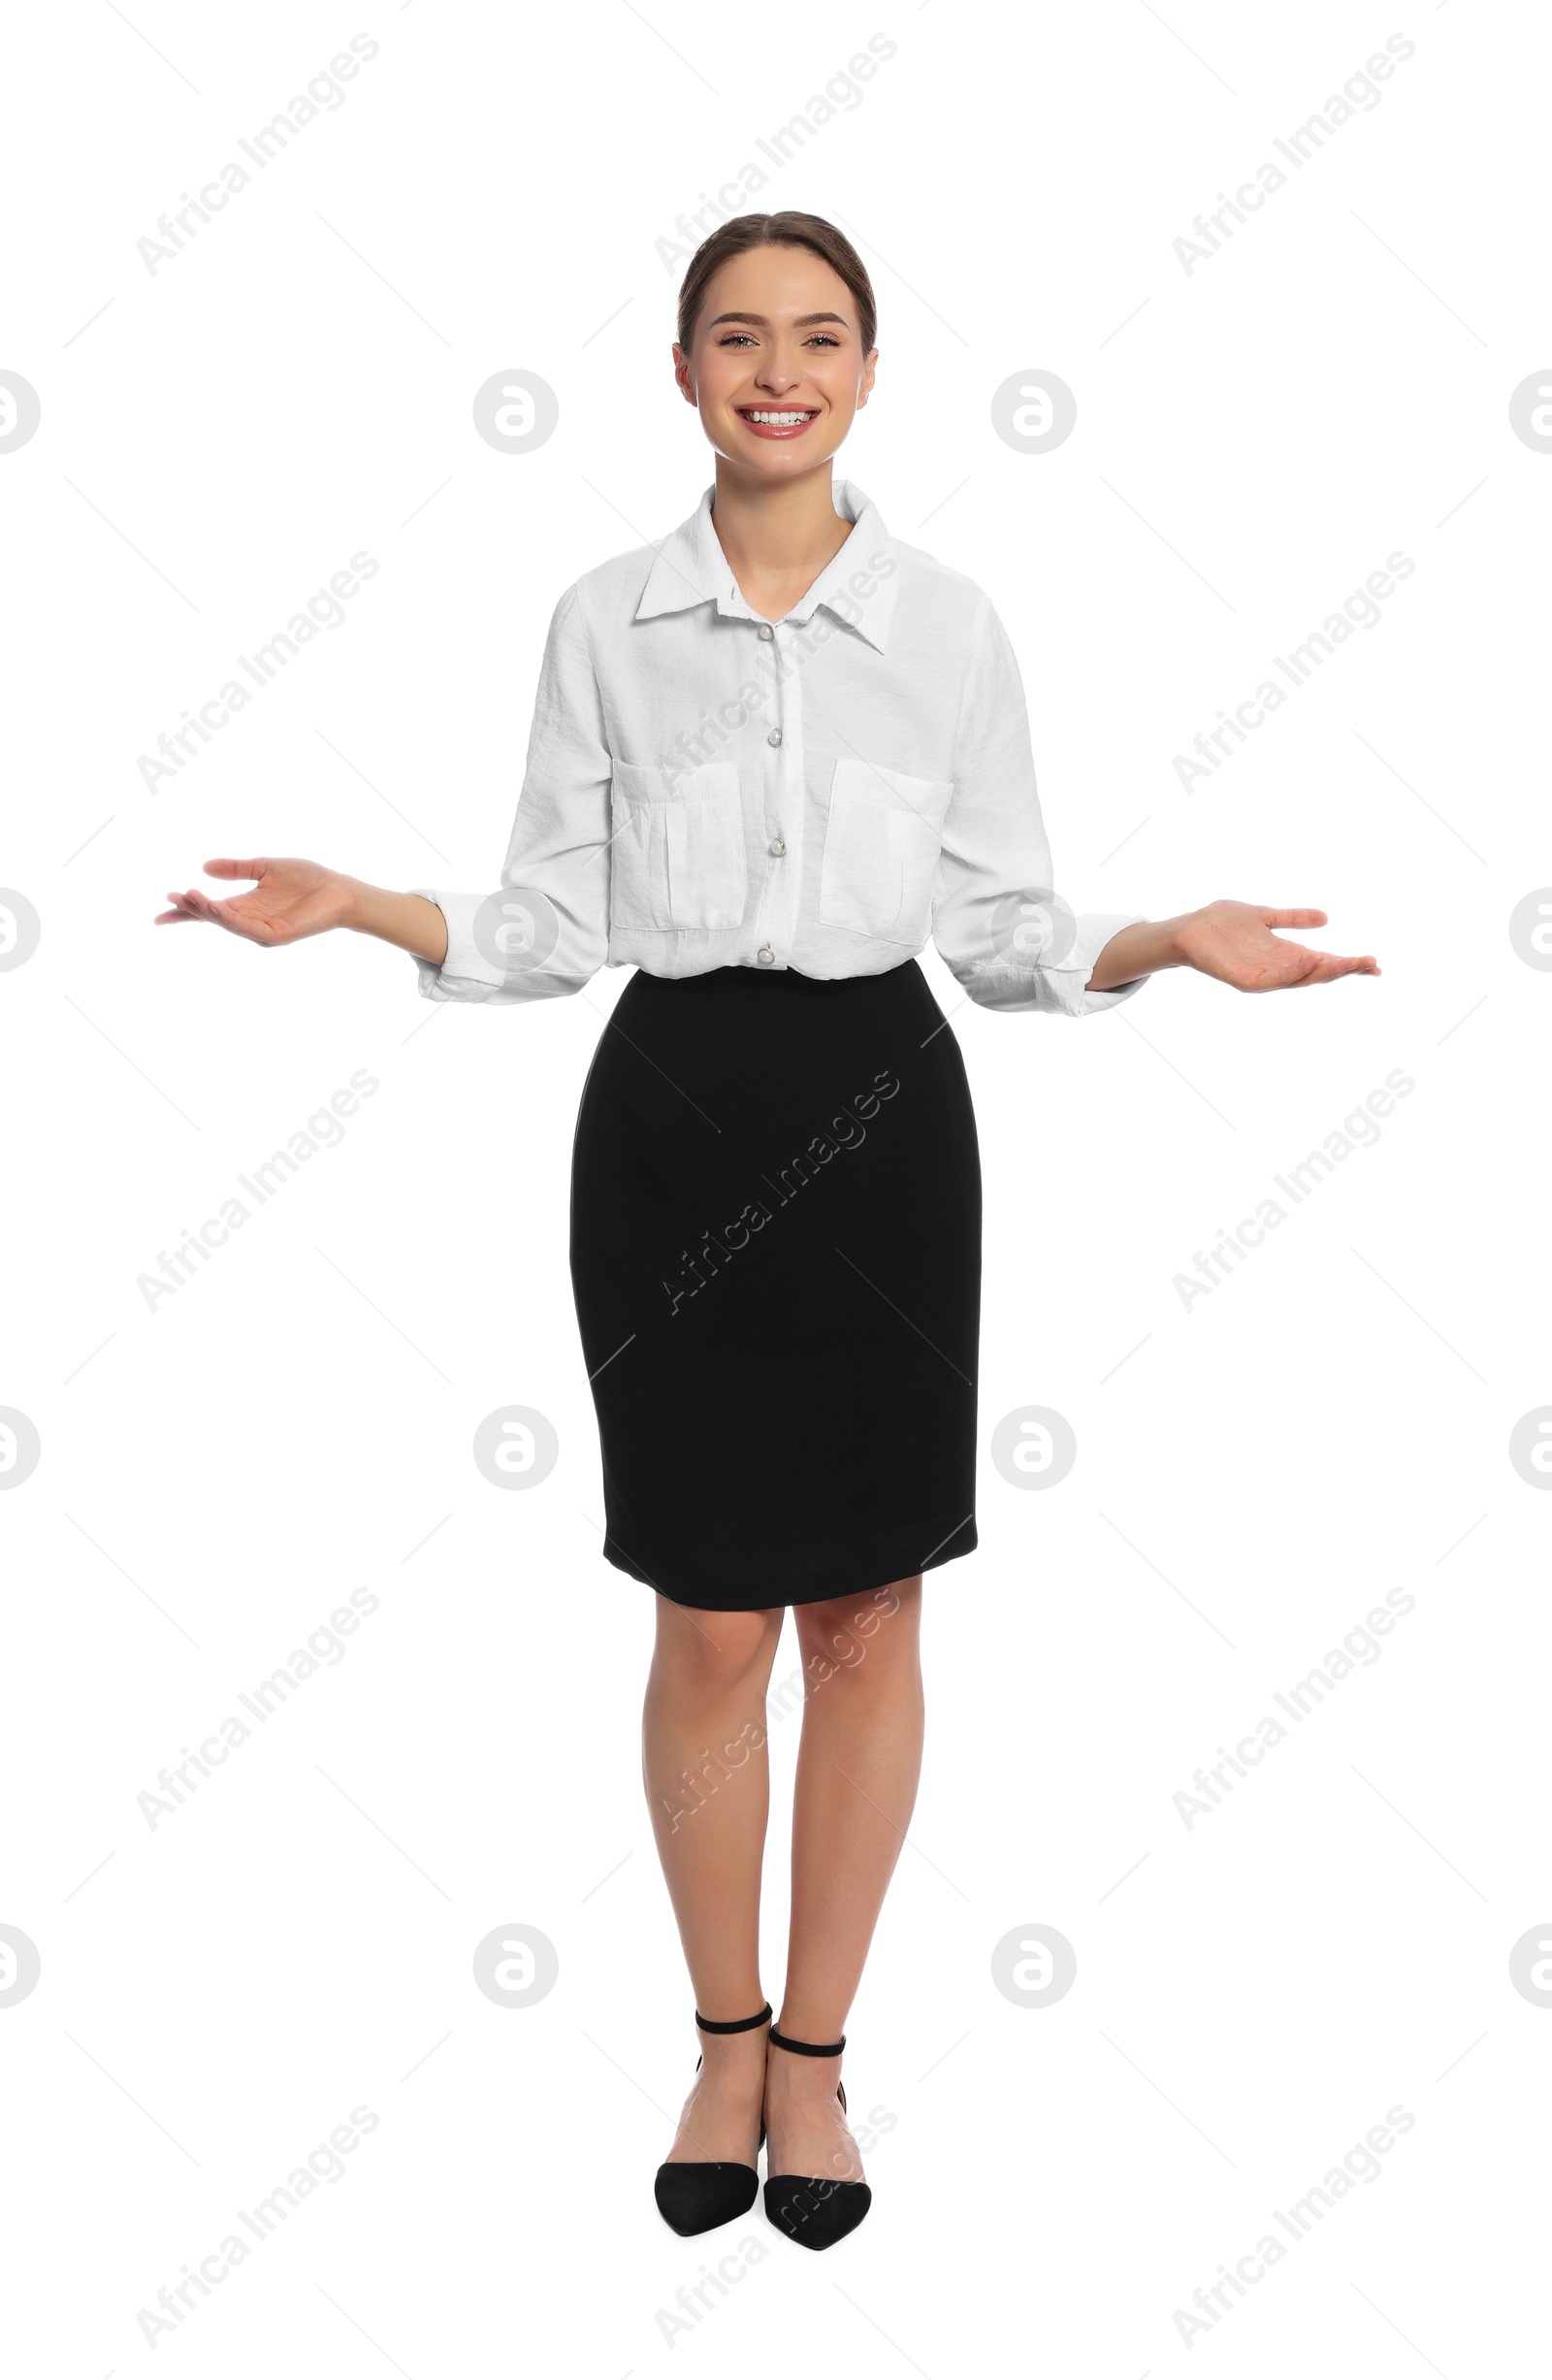 Photo of Full length portrait of hostess in uniform on white background